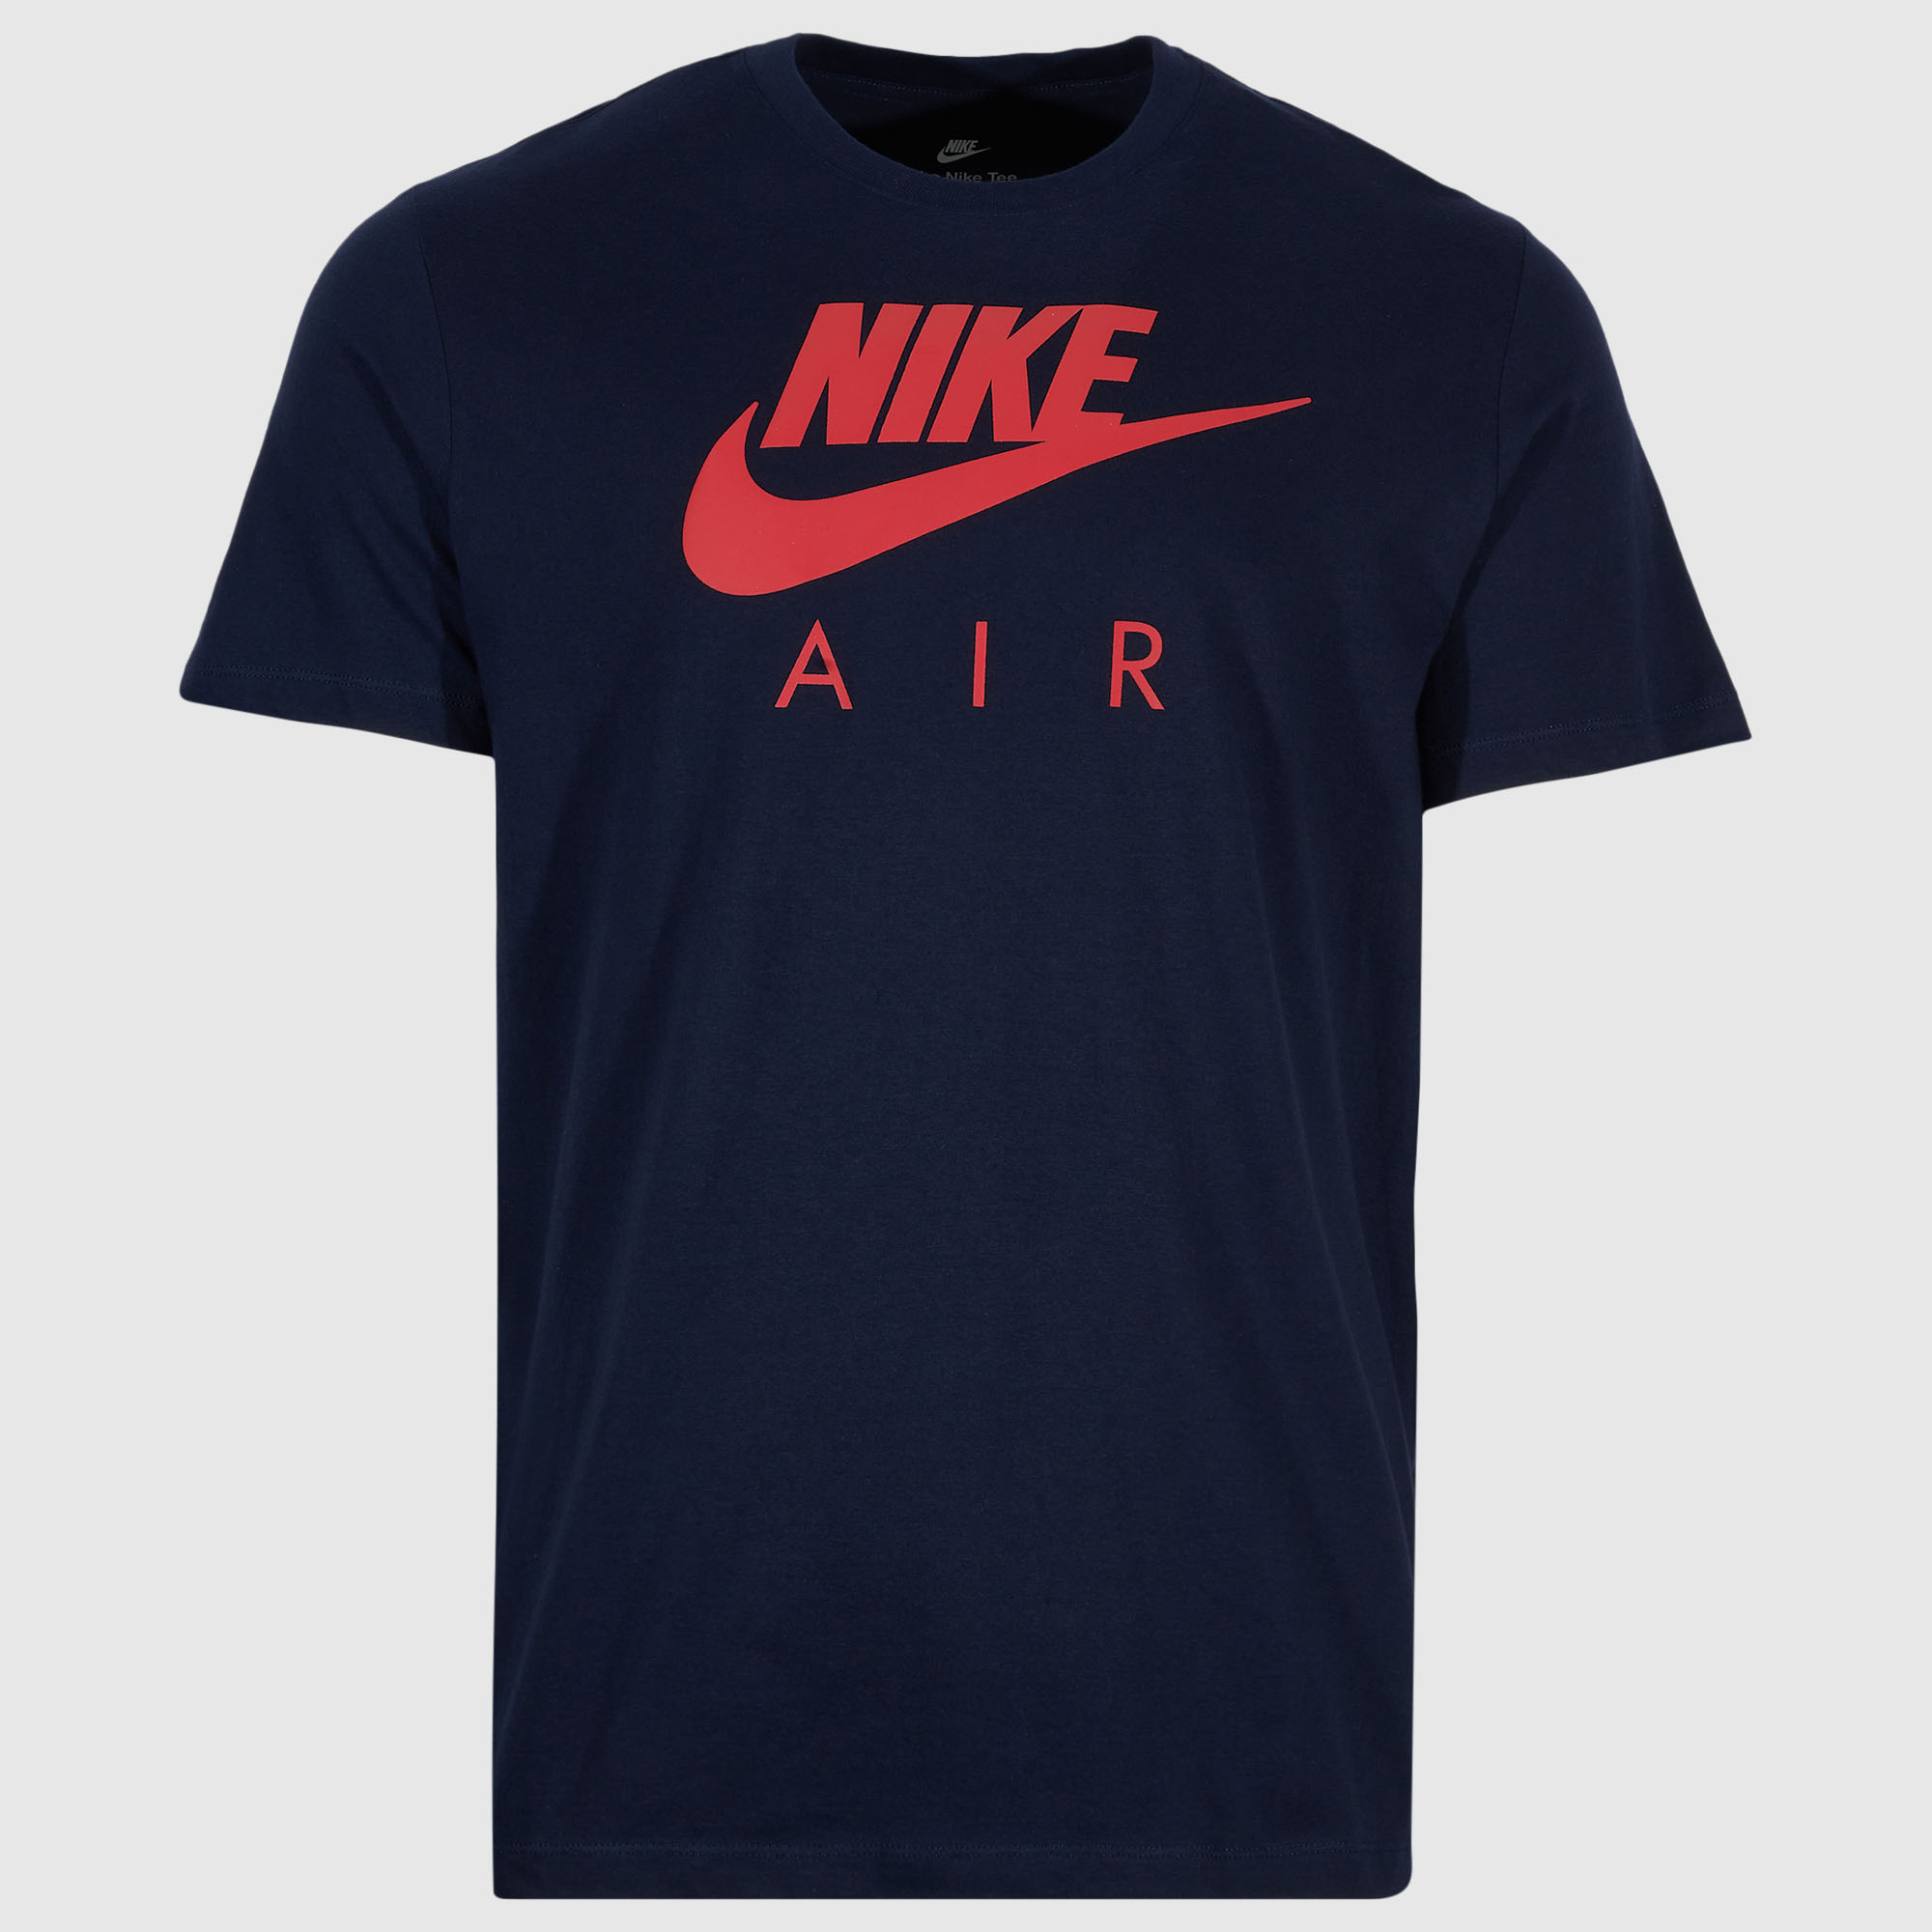 Nike Air Futura T Shirt Navy Blue Red